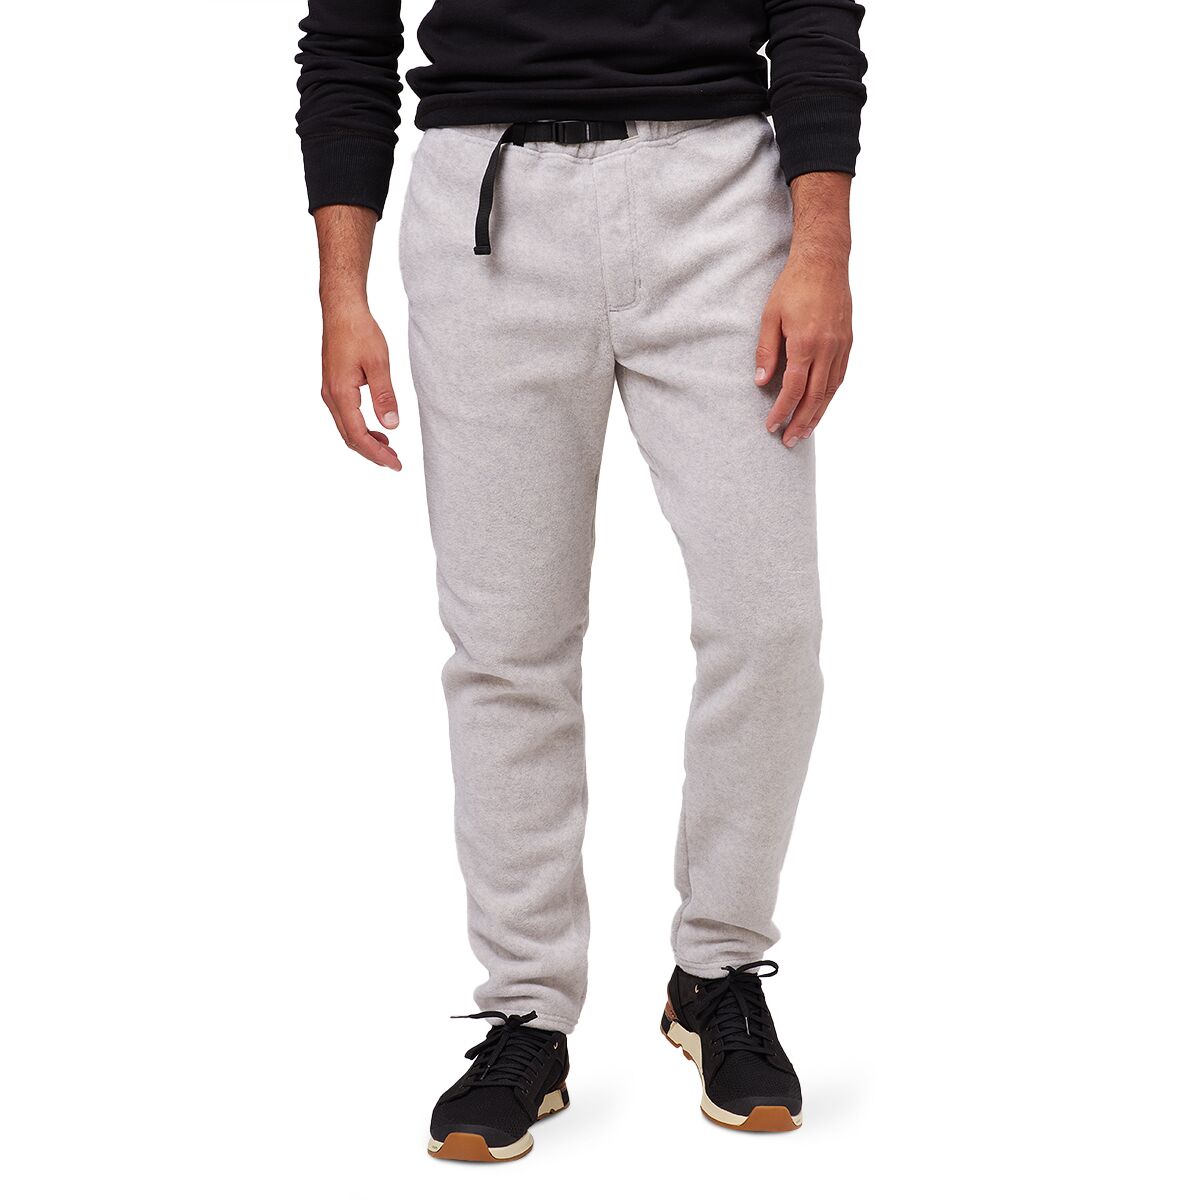 Men's Lightweight Synchilla Snap-T Fleece Pants